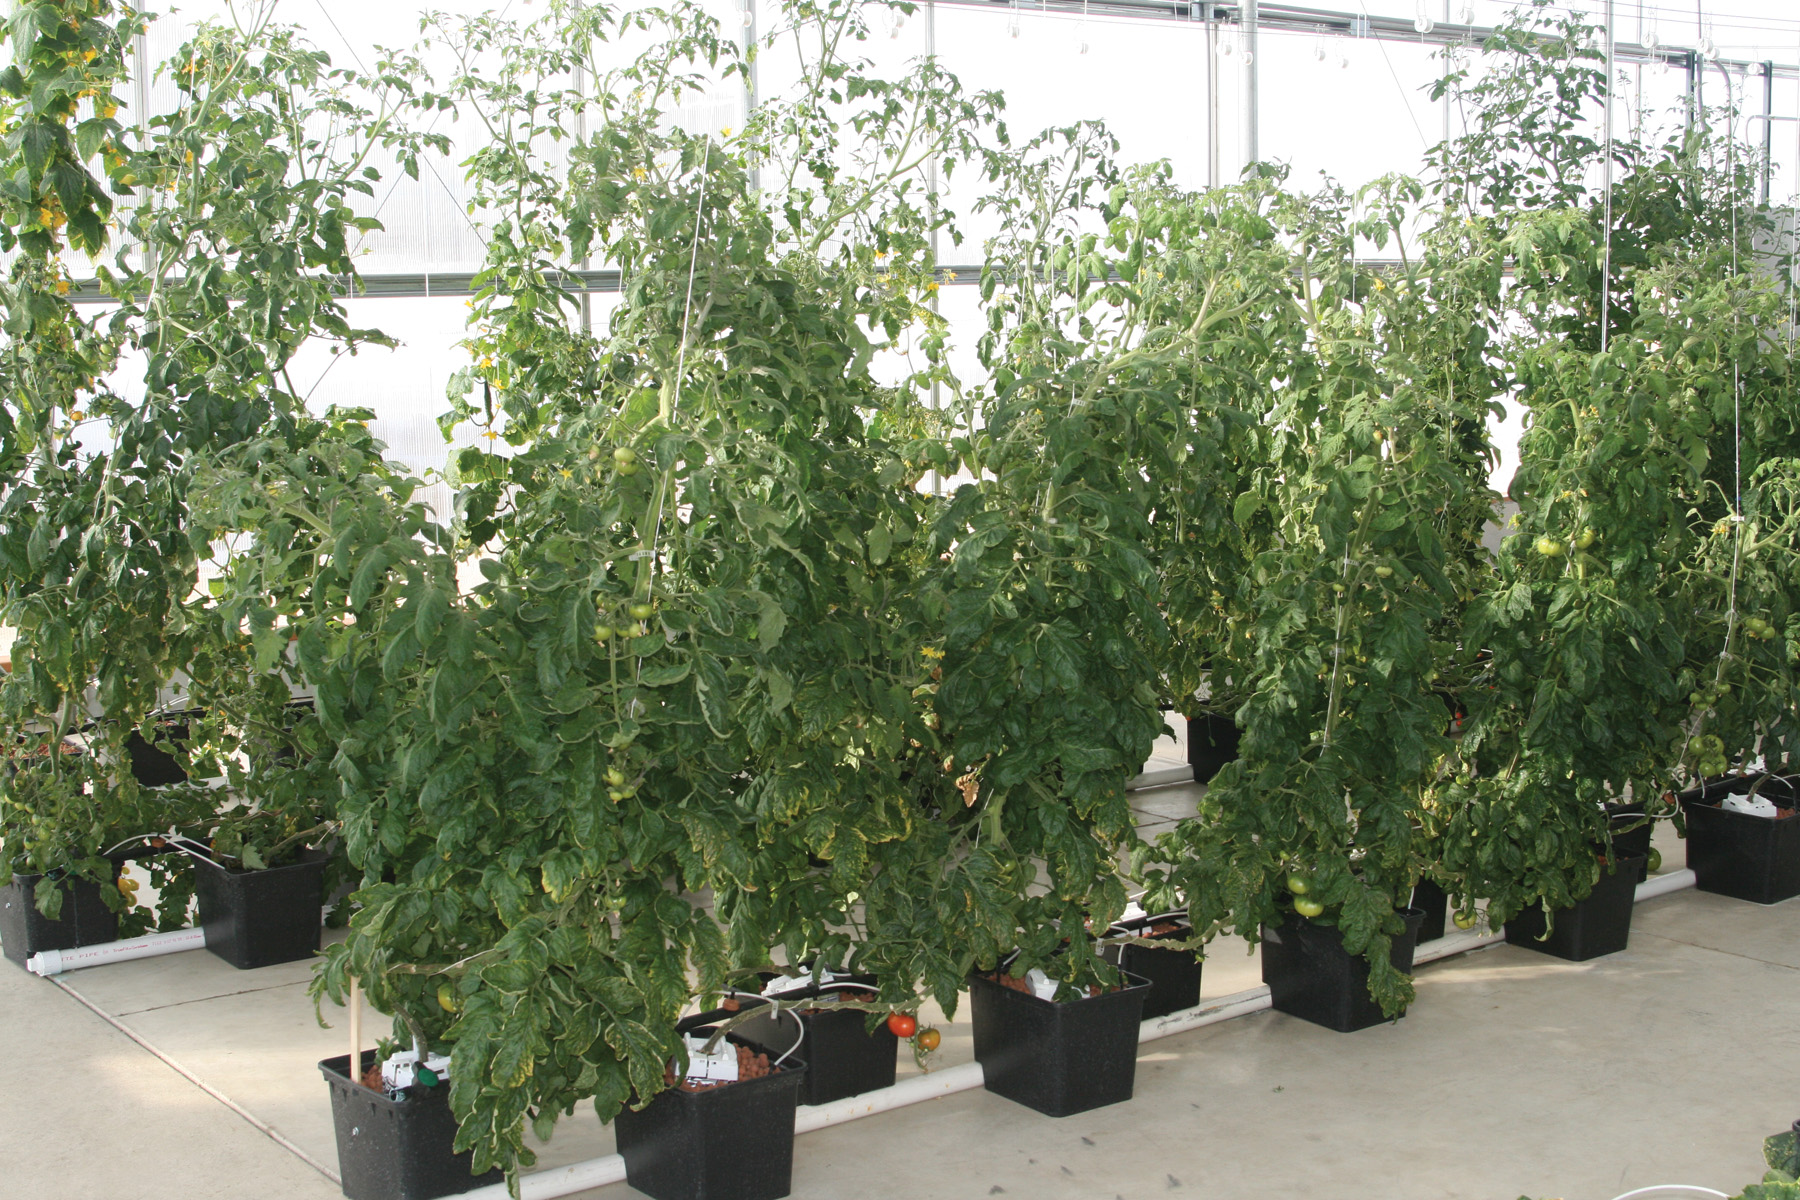 Hydroponic tomato dutch bucket system | Growers Supply